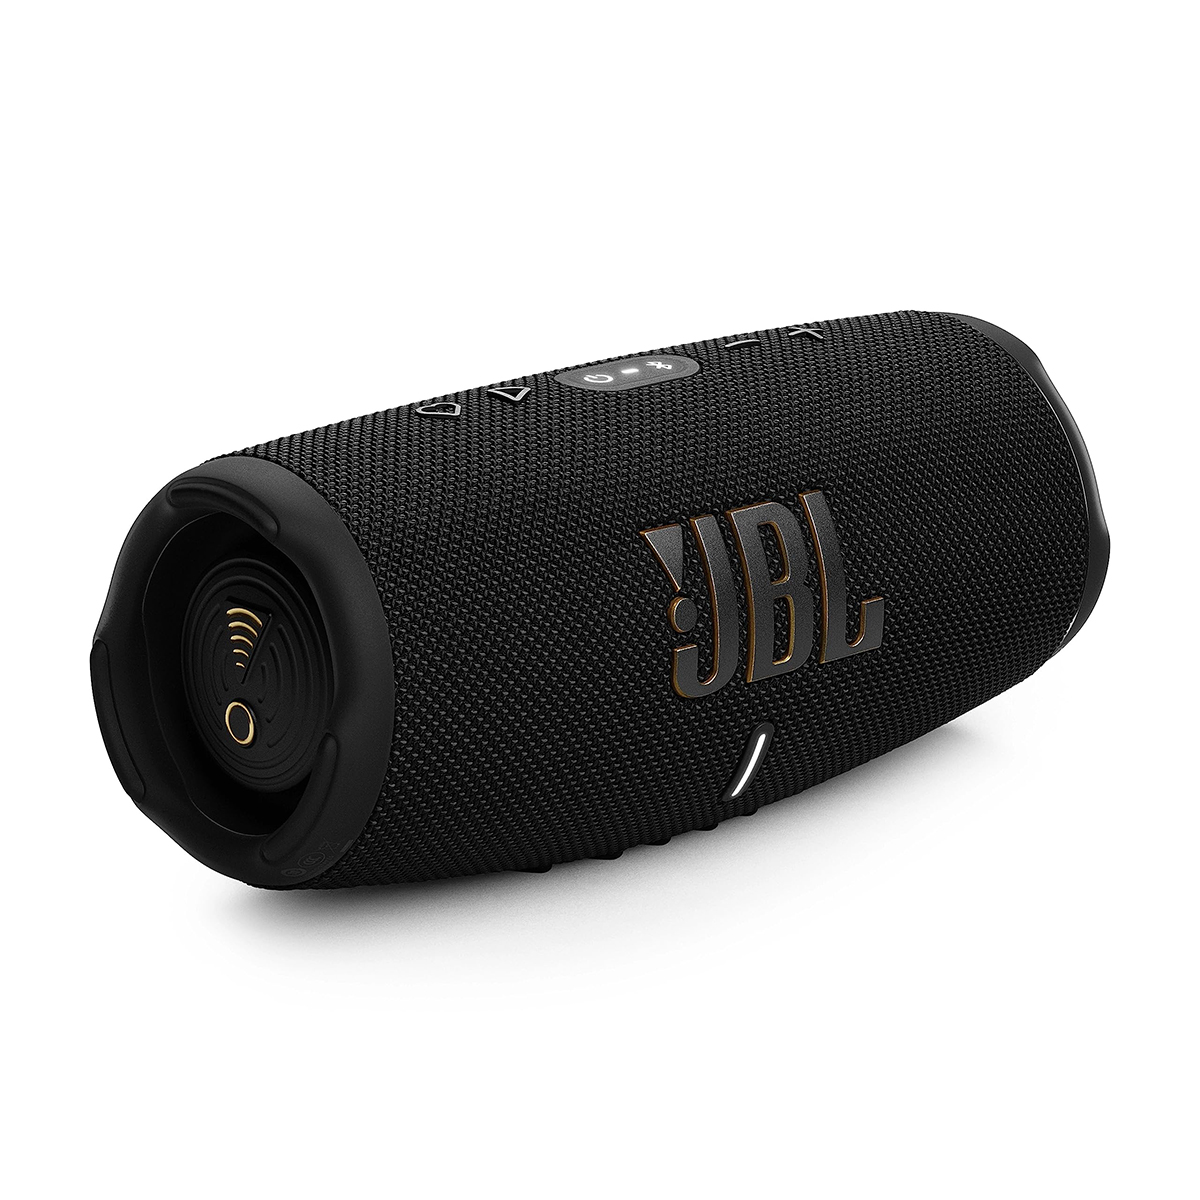 JBL - Charge 5, WiFi Speaker - Black